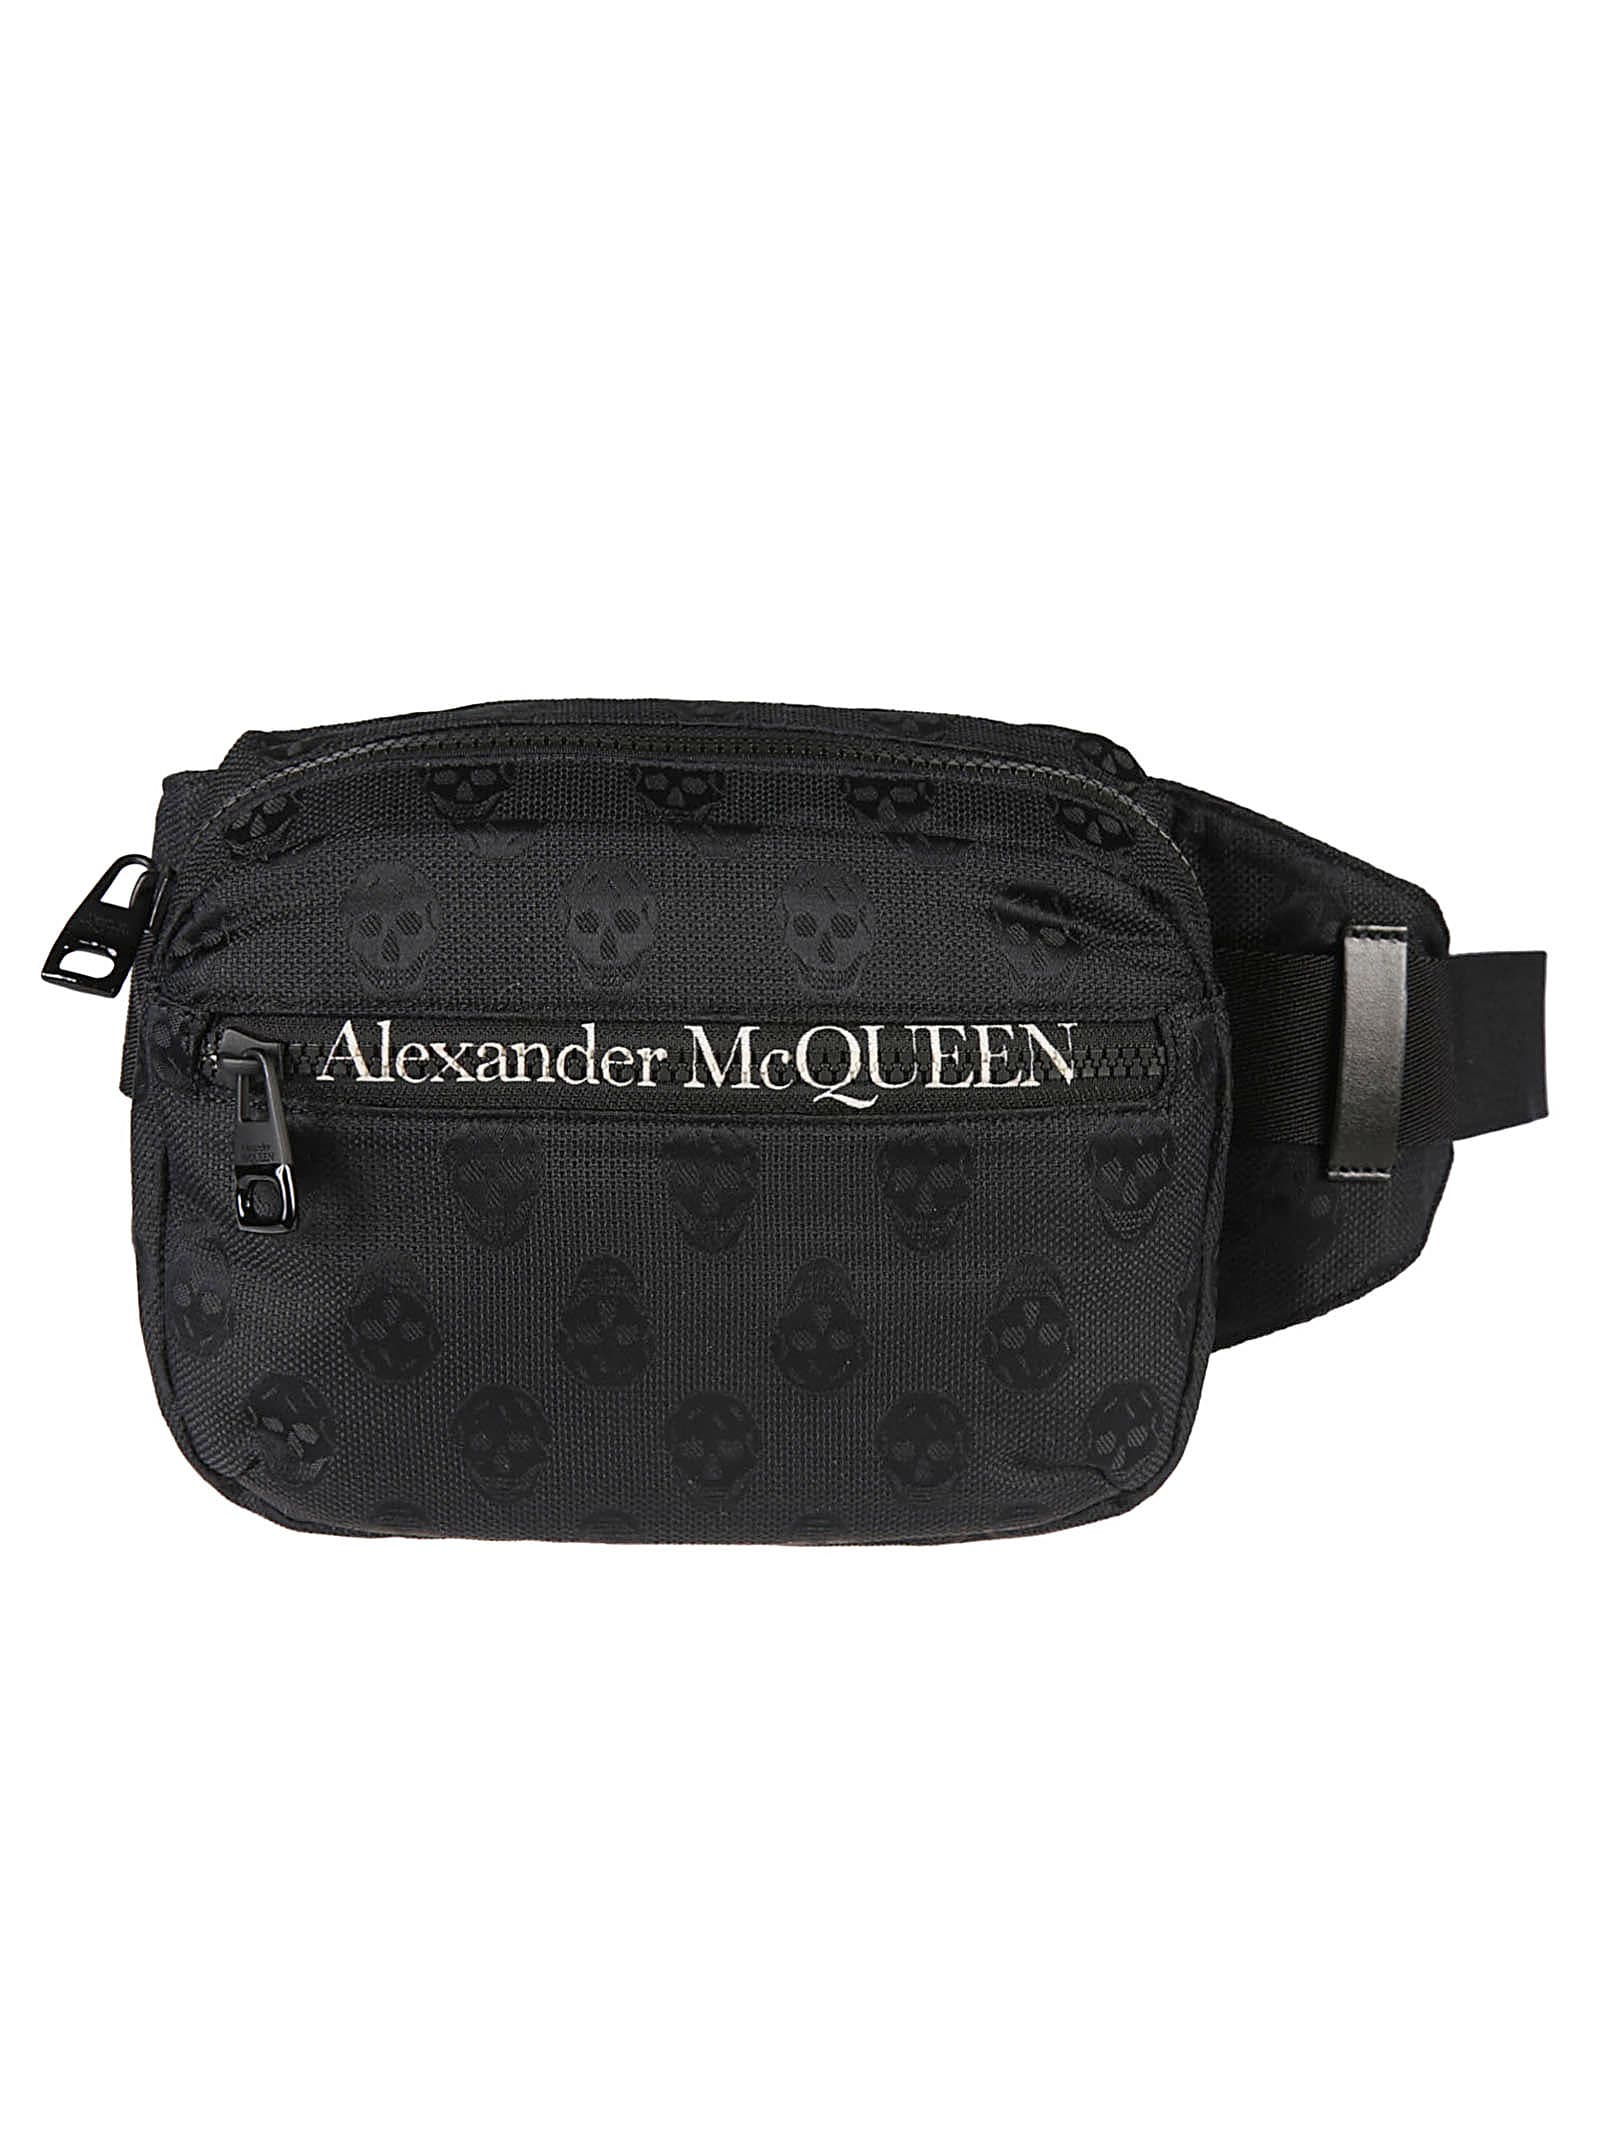 Alexander McQueen Skull Printed Belt Bag